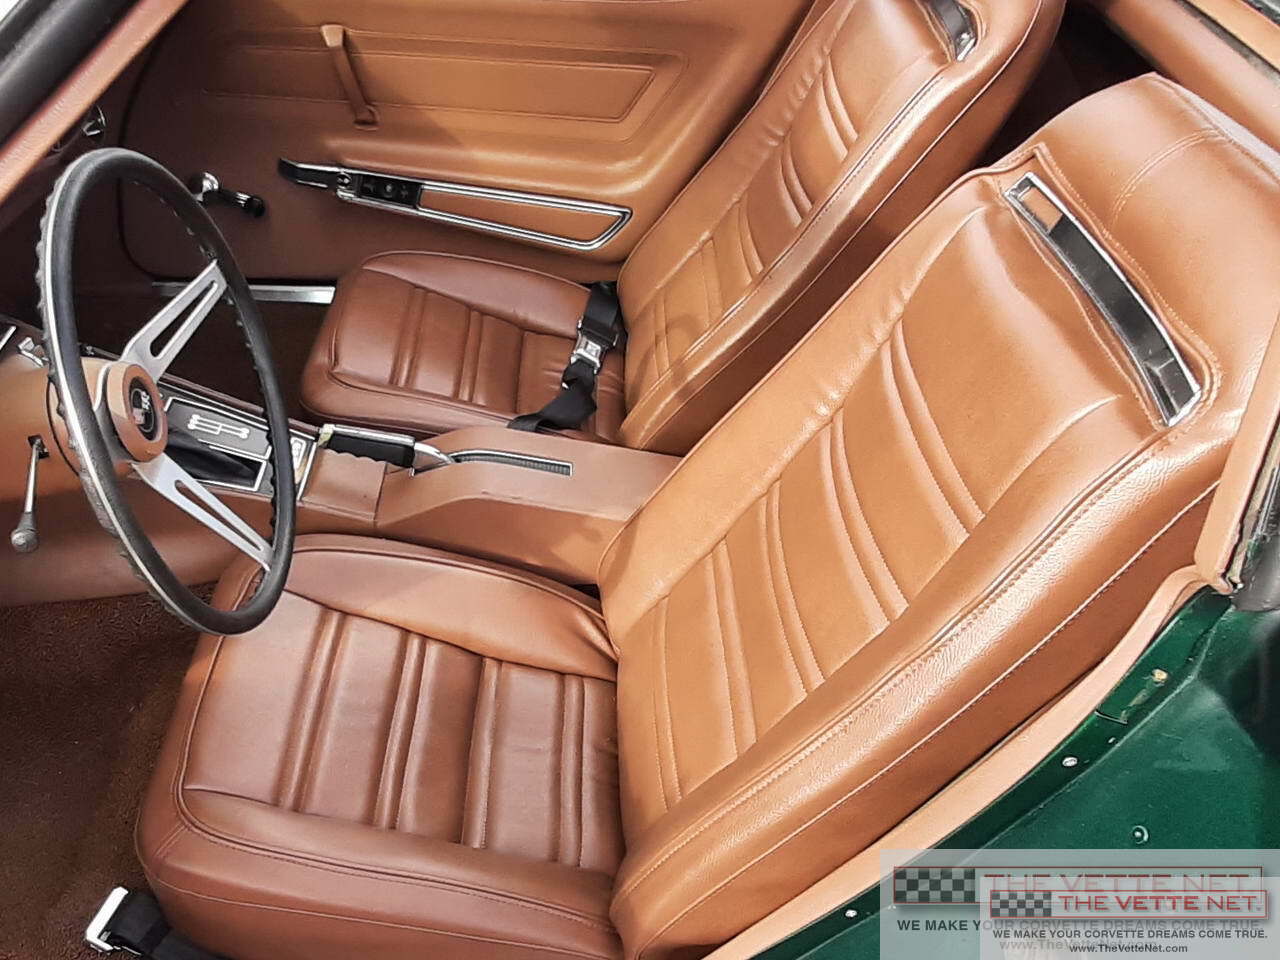 1973 Corvette T-Top Blue-Green Metallic